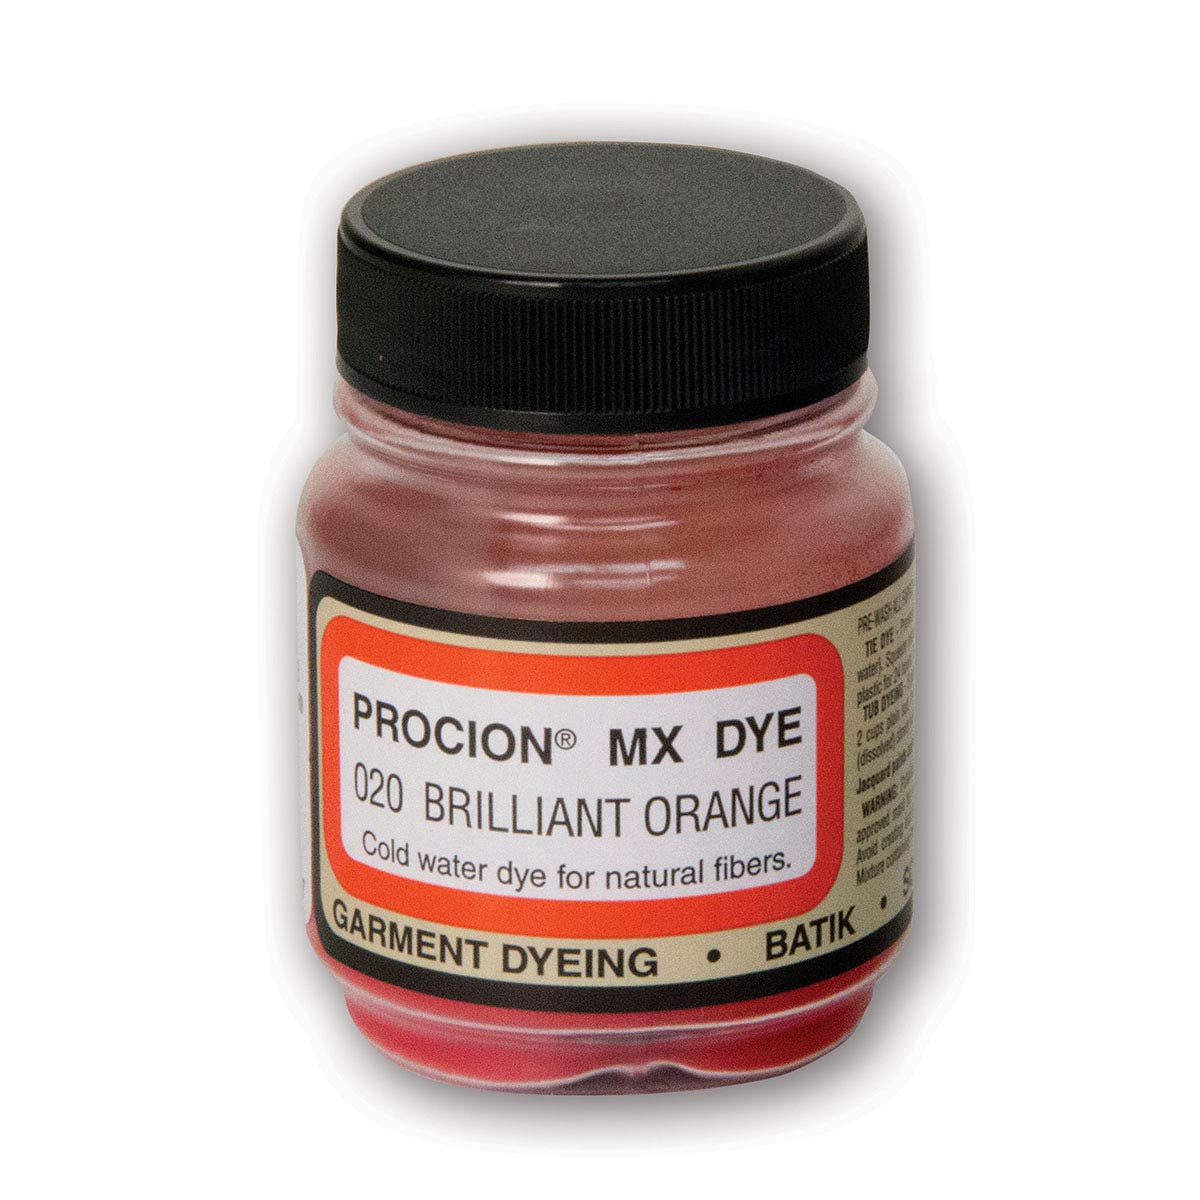 Jacquard - Procion MX Dye - Fabric Textile - Bright Orange 020